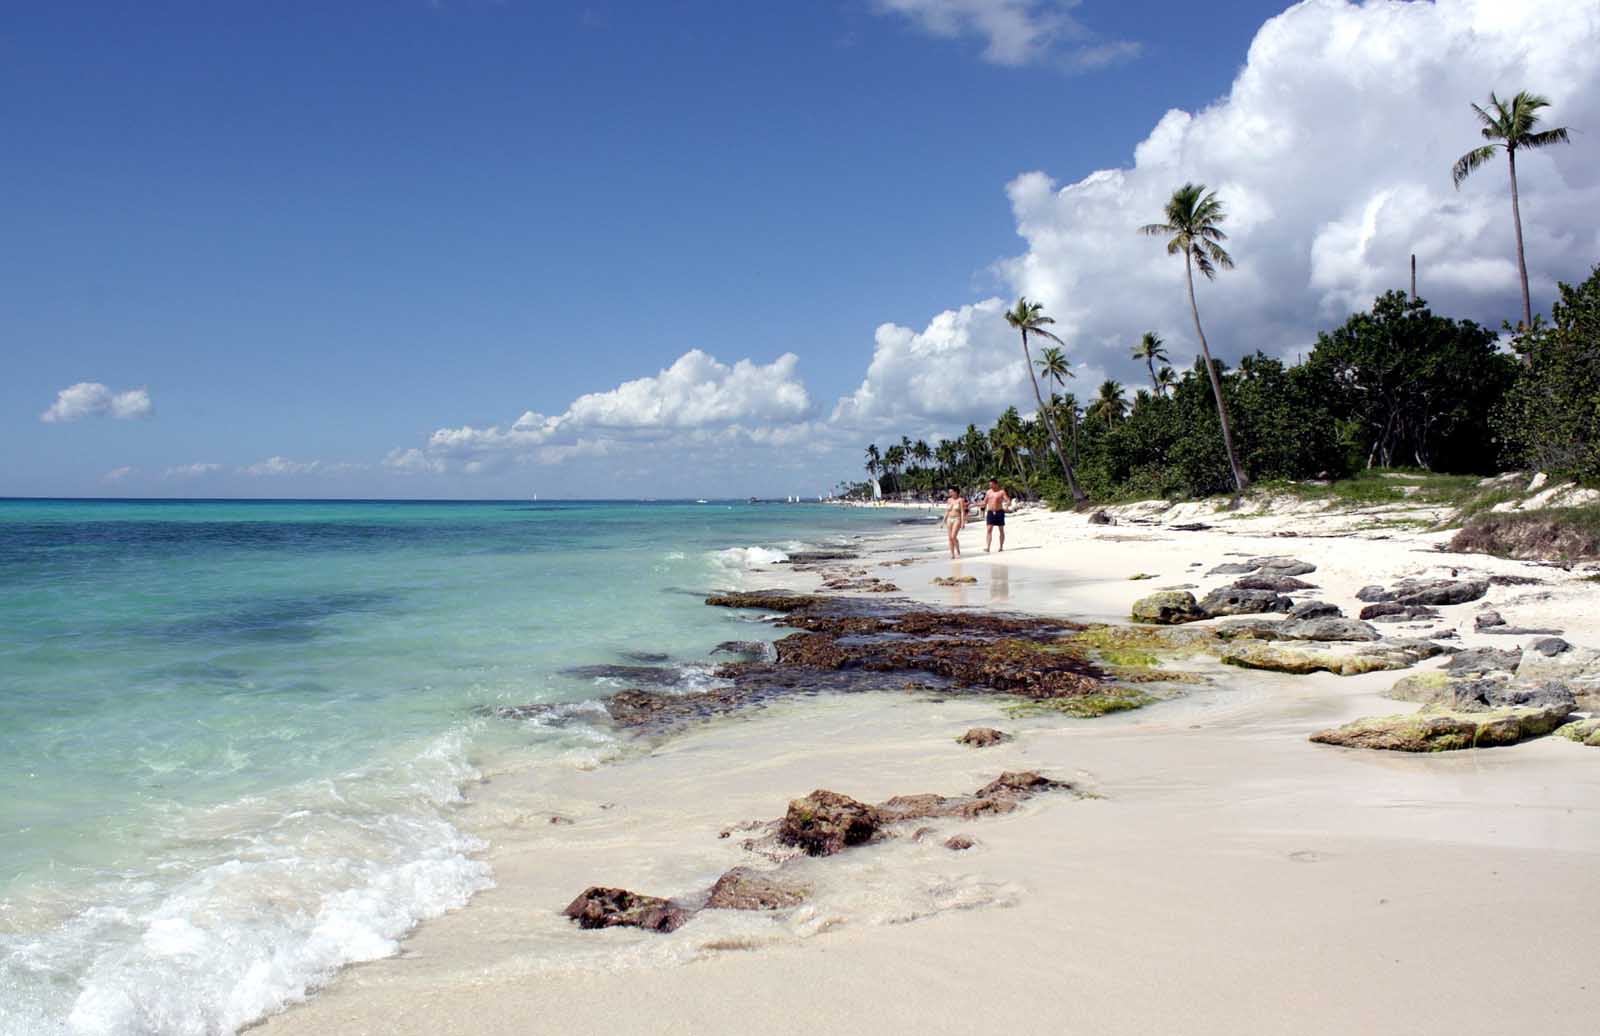 Playa Bahoruco in the Dominican Republic